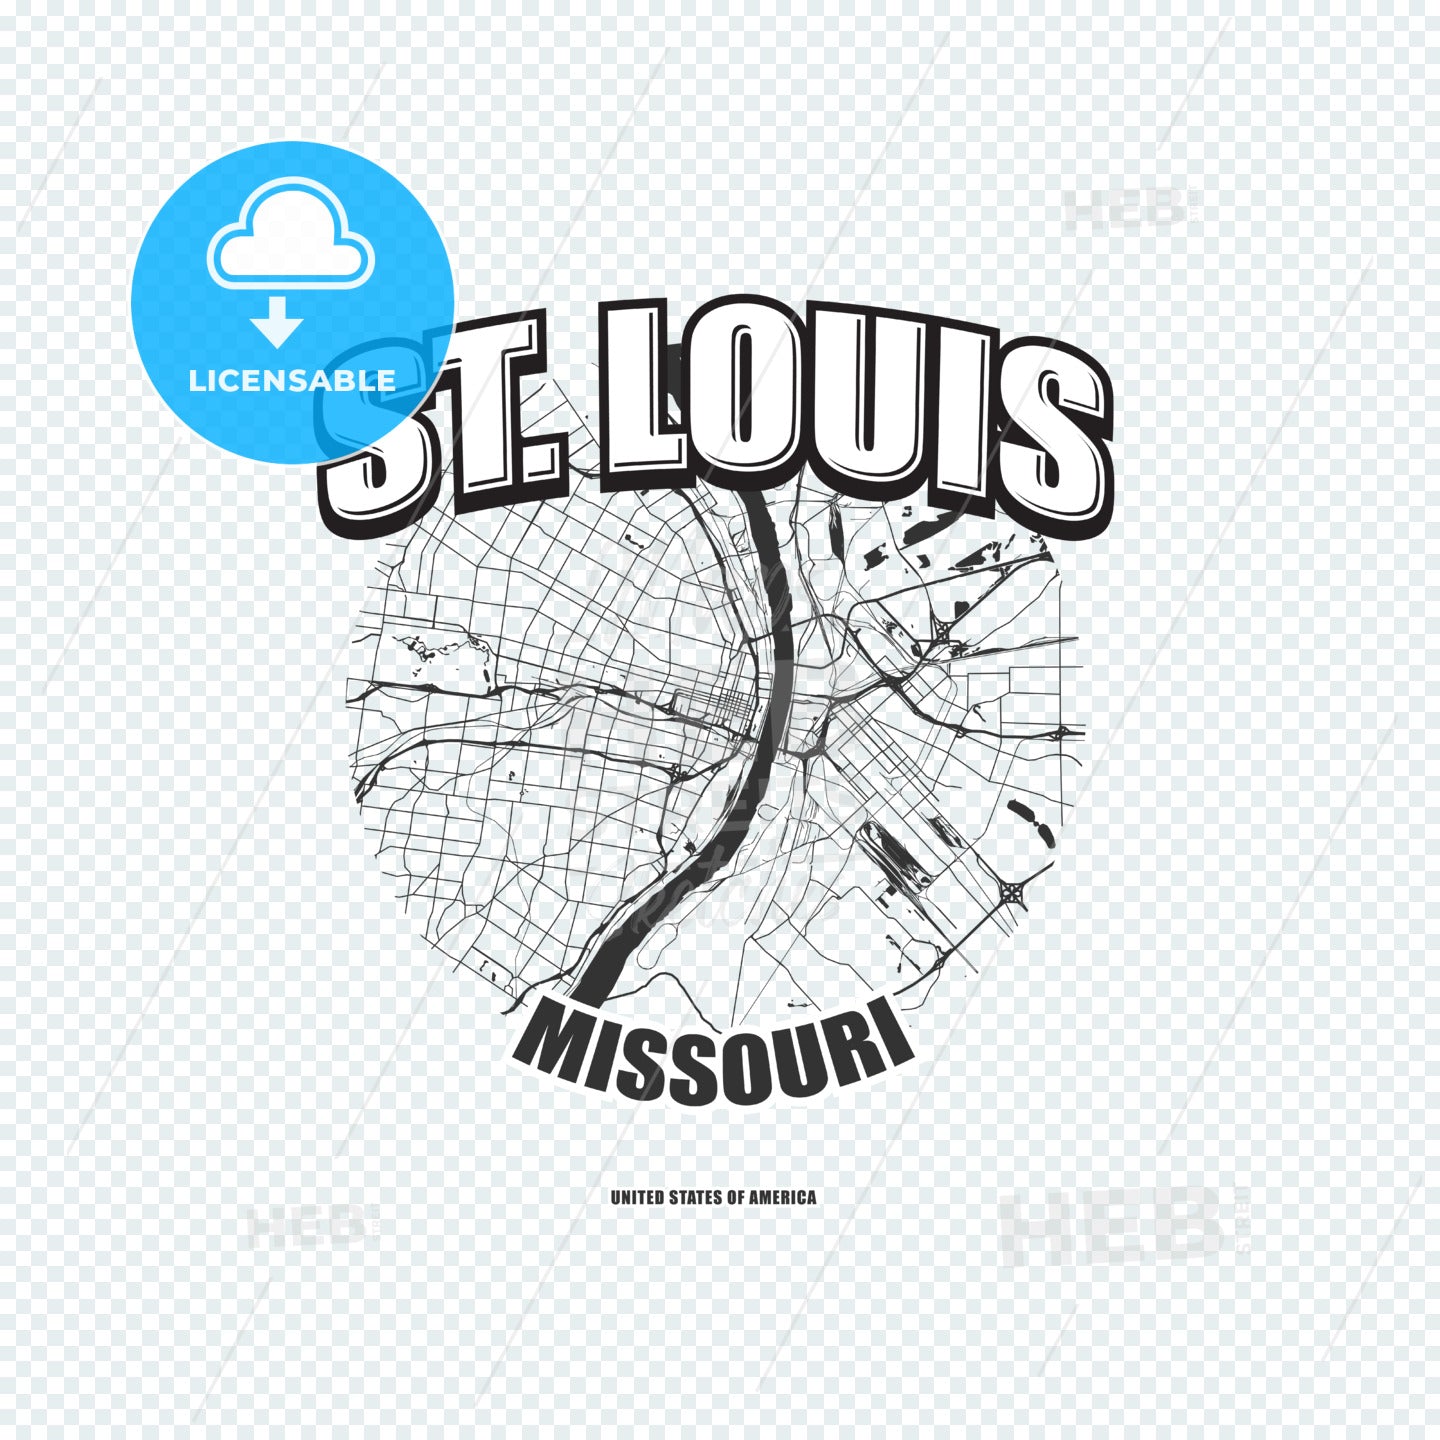 St. Louis, Missouri, logo artwork – instant download